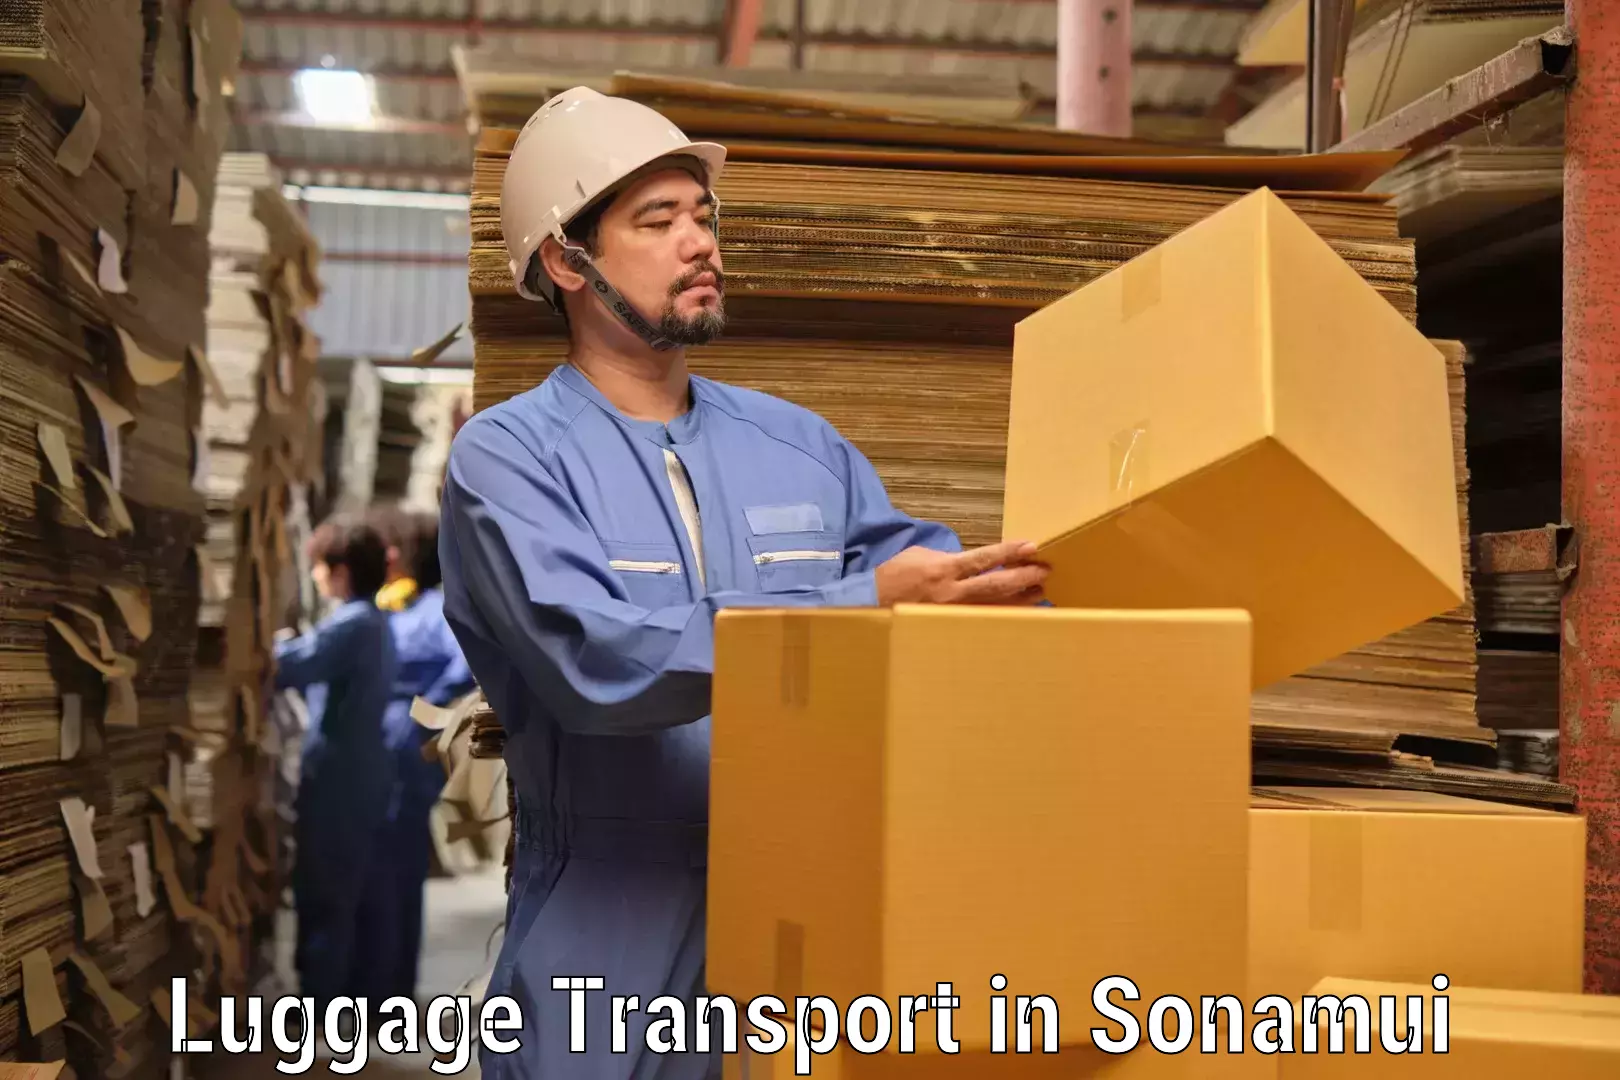 Luggage transfer service in Sonamui